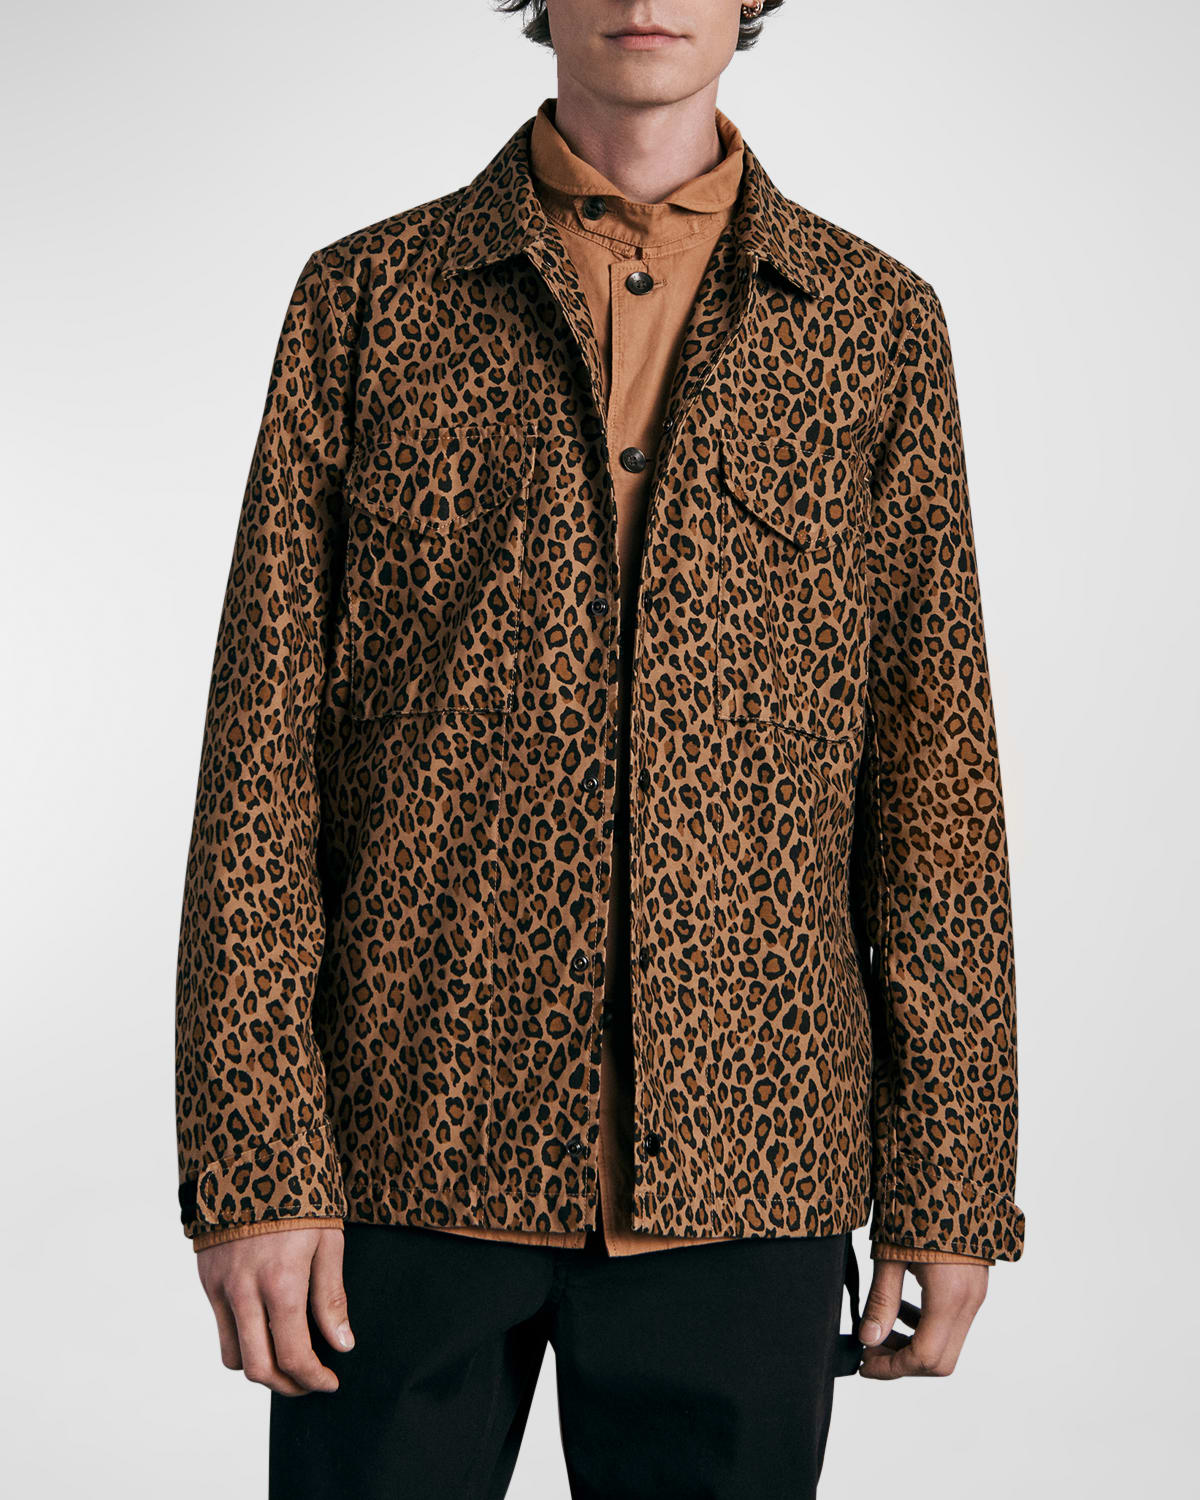 Men's Leopard-Print Coach Jacket